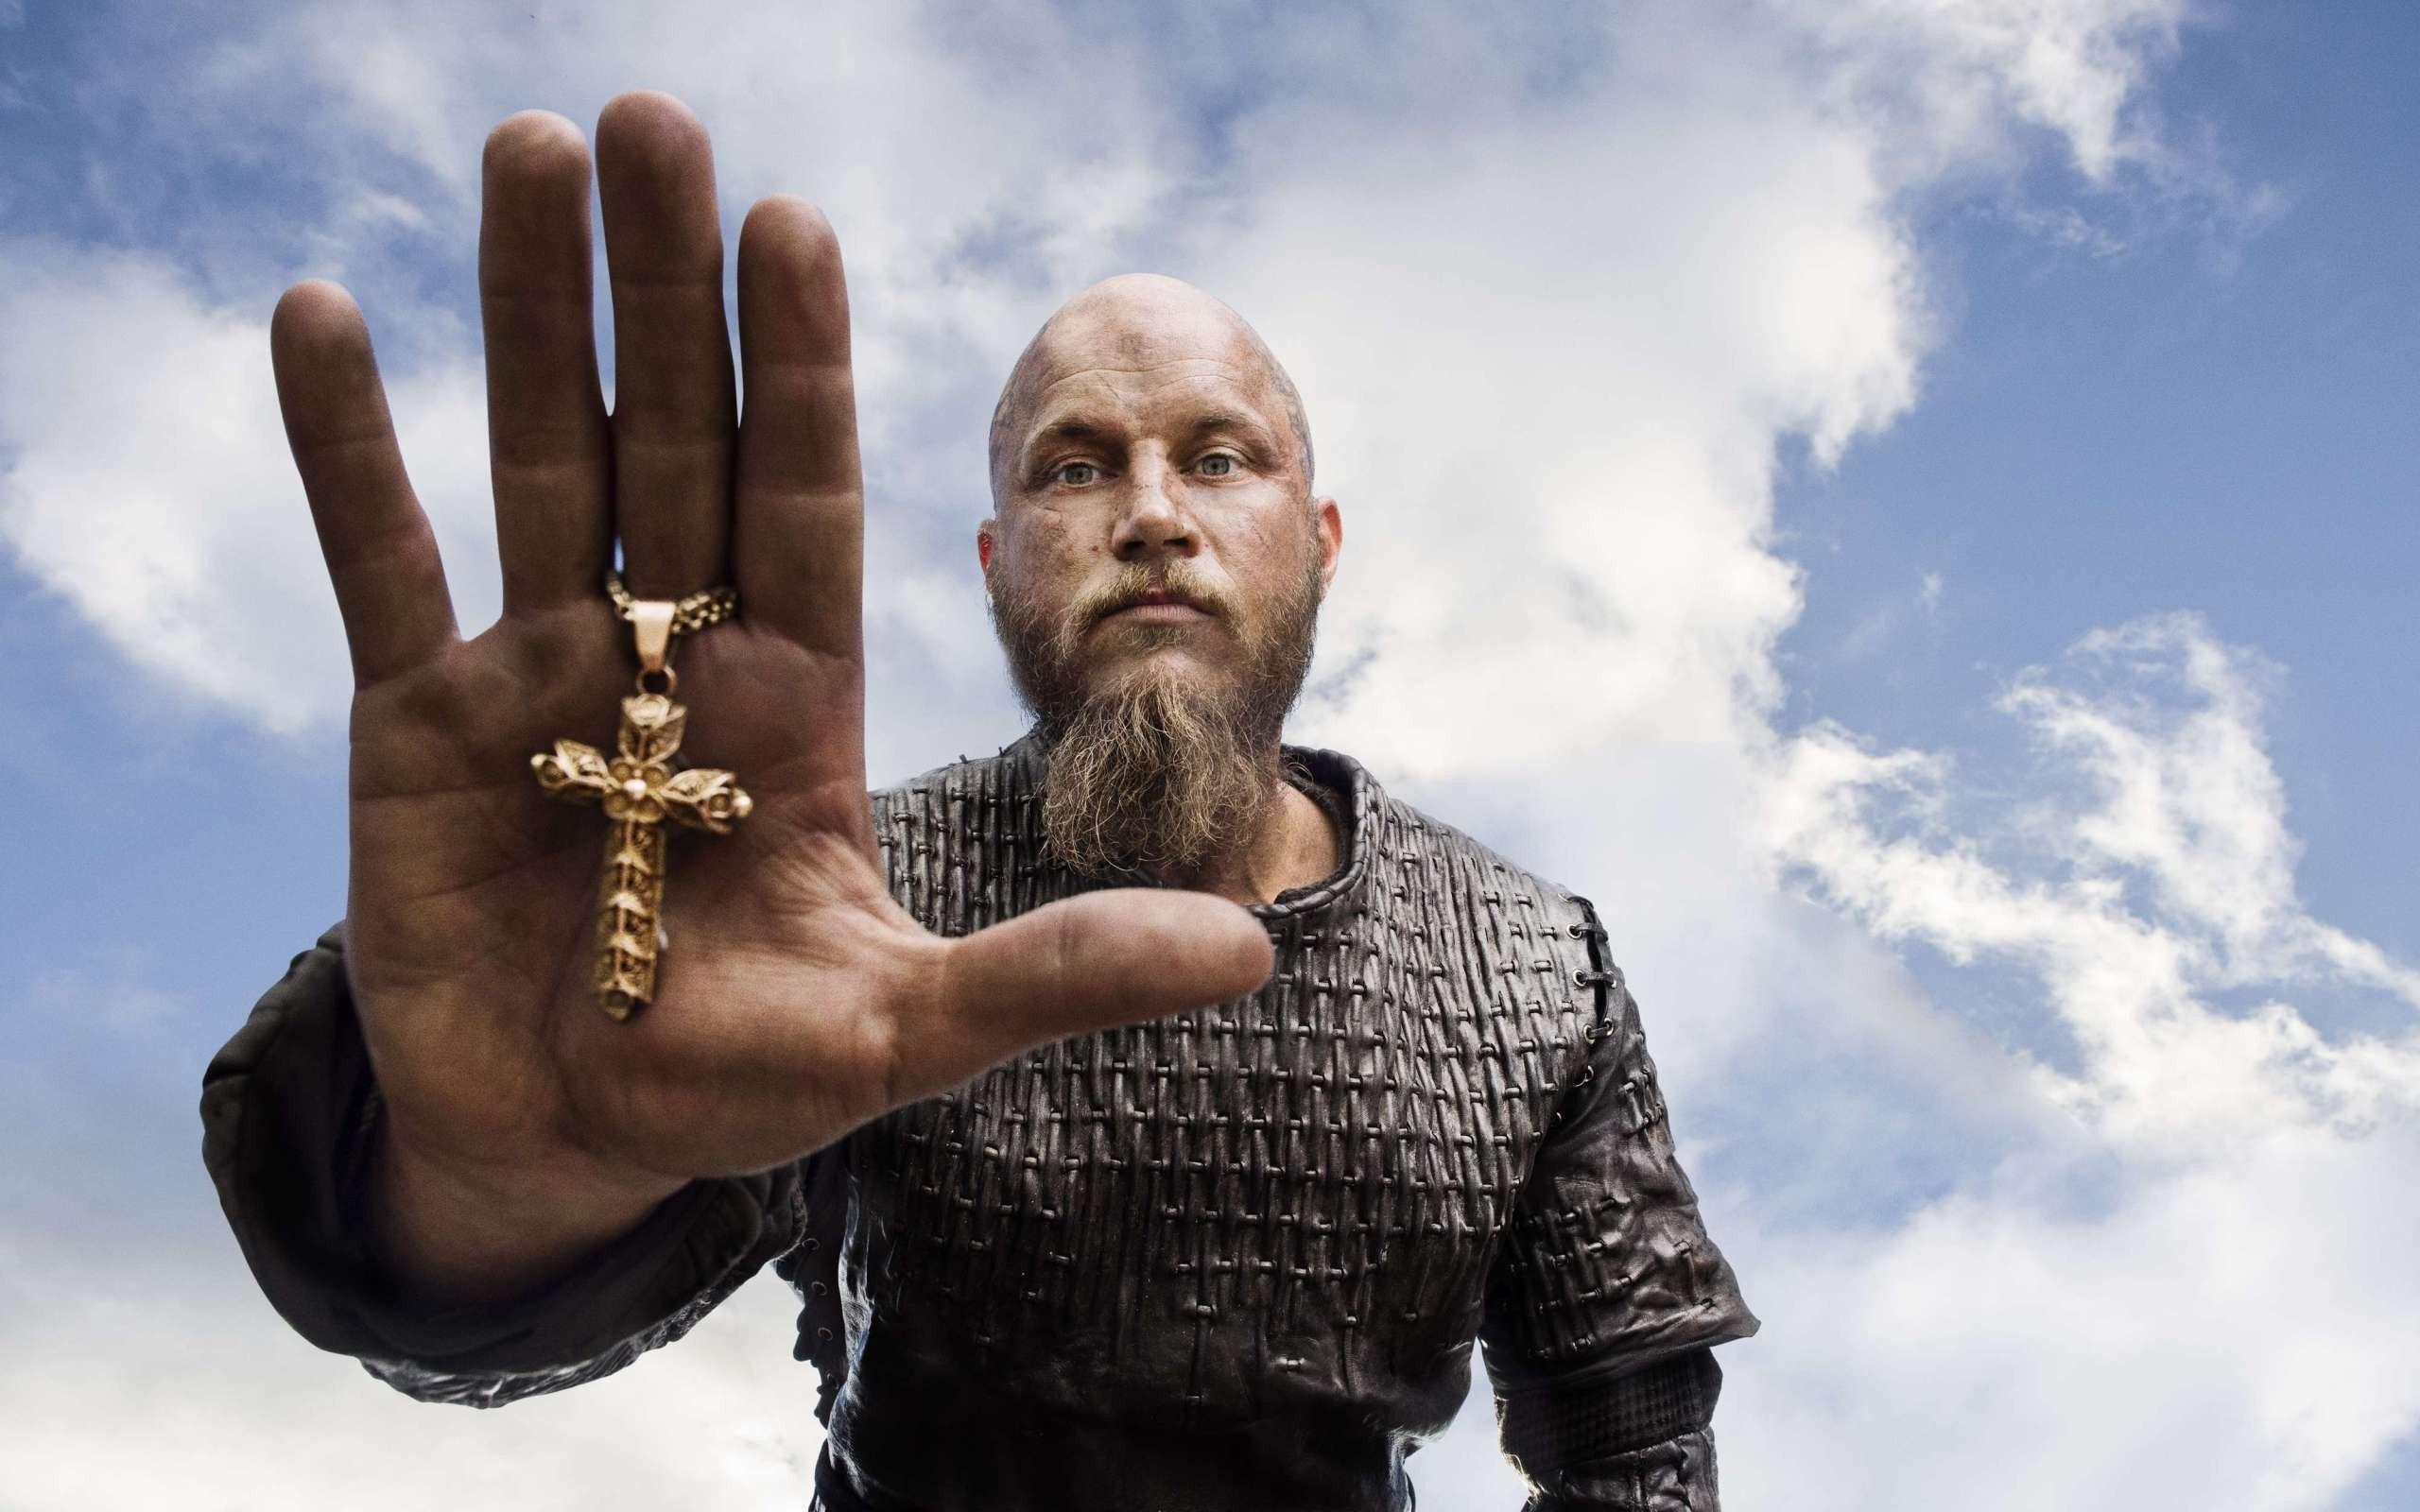 Ragnar Lodbrok In Vikings, HD Tv Shows, 4k Wallpaper, Image